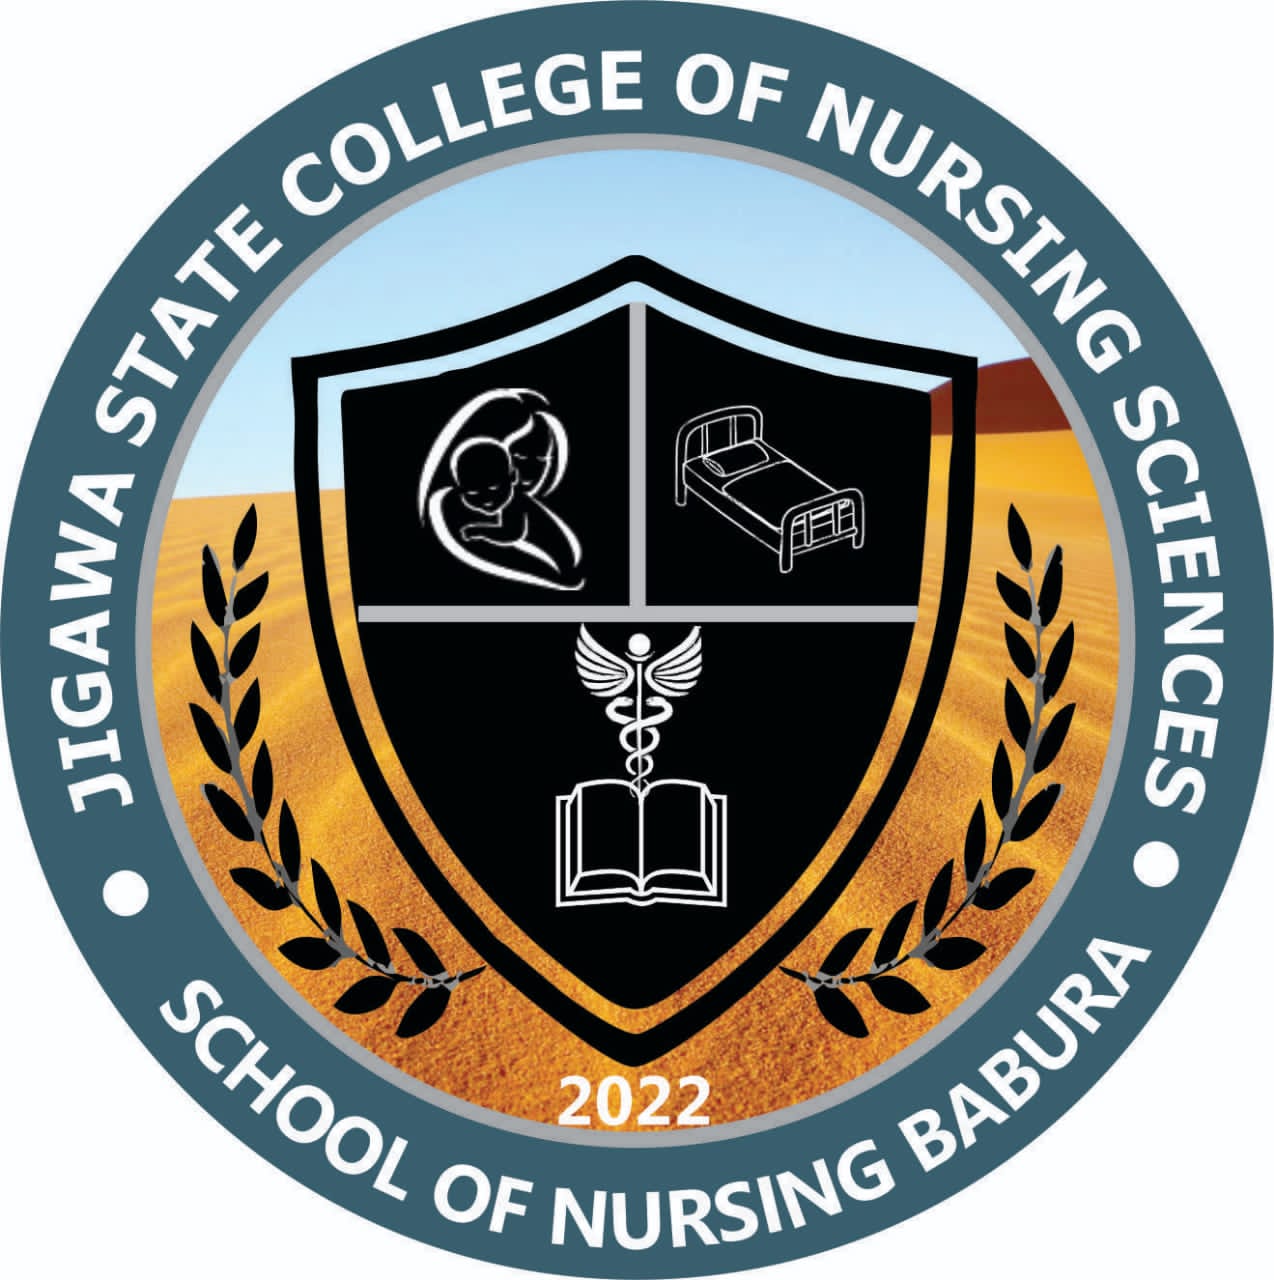 Basic Nursing